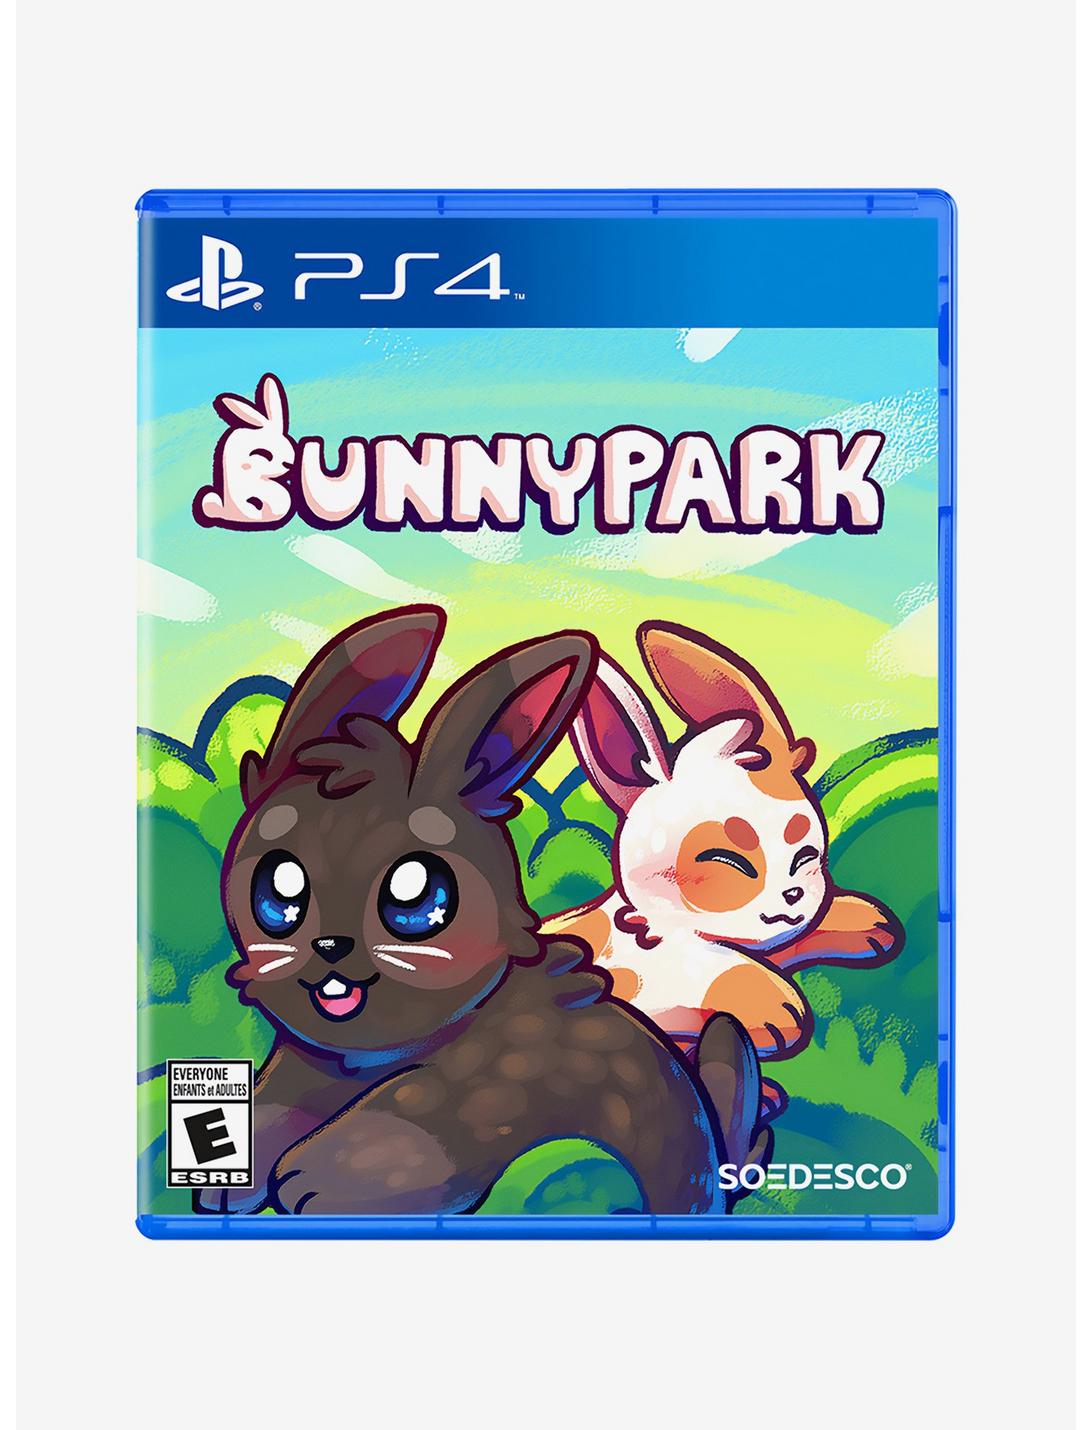 Bunny Park Game for PlayStation 4, , hi-res